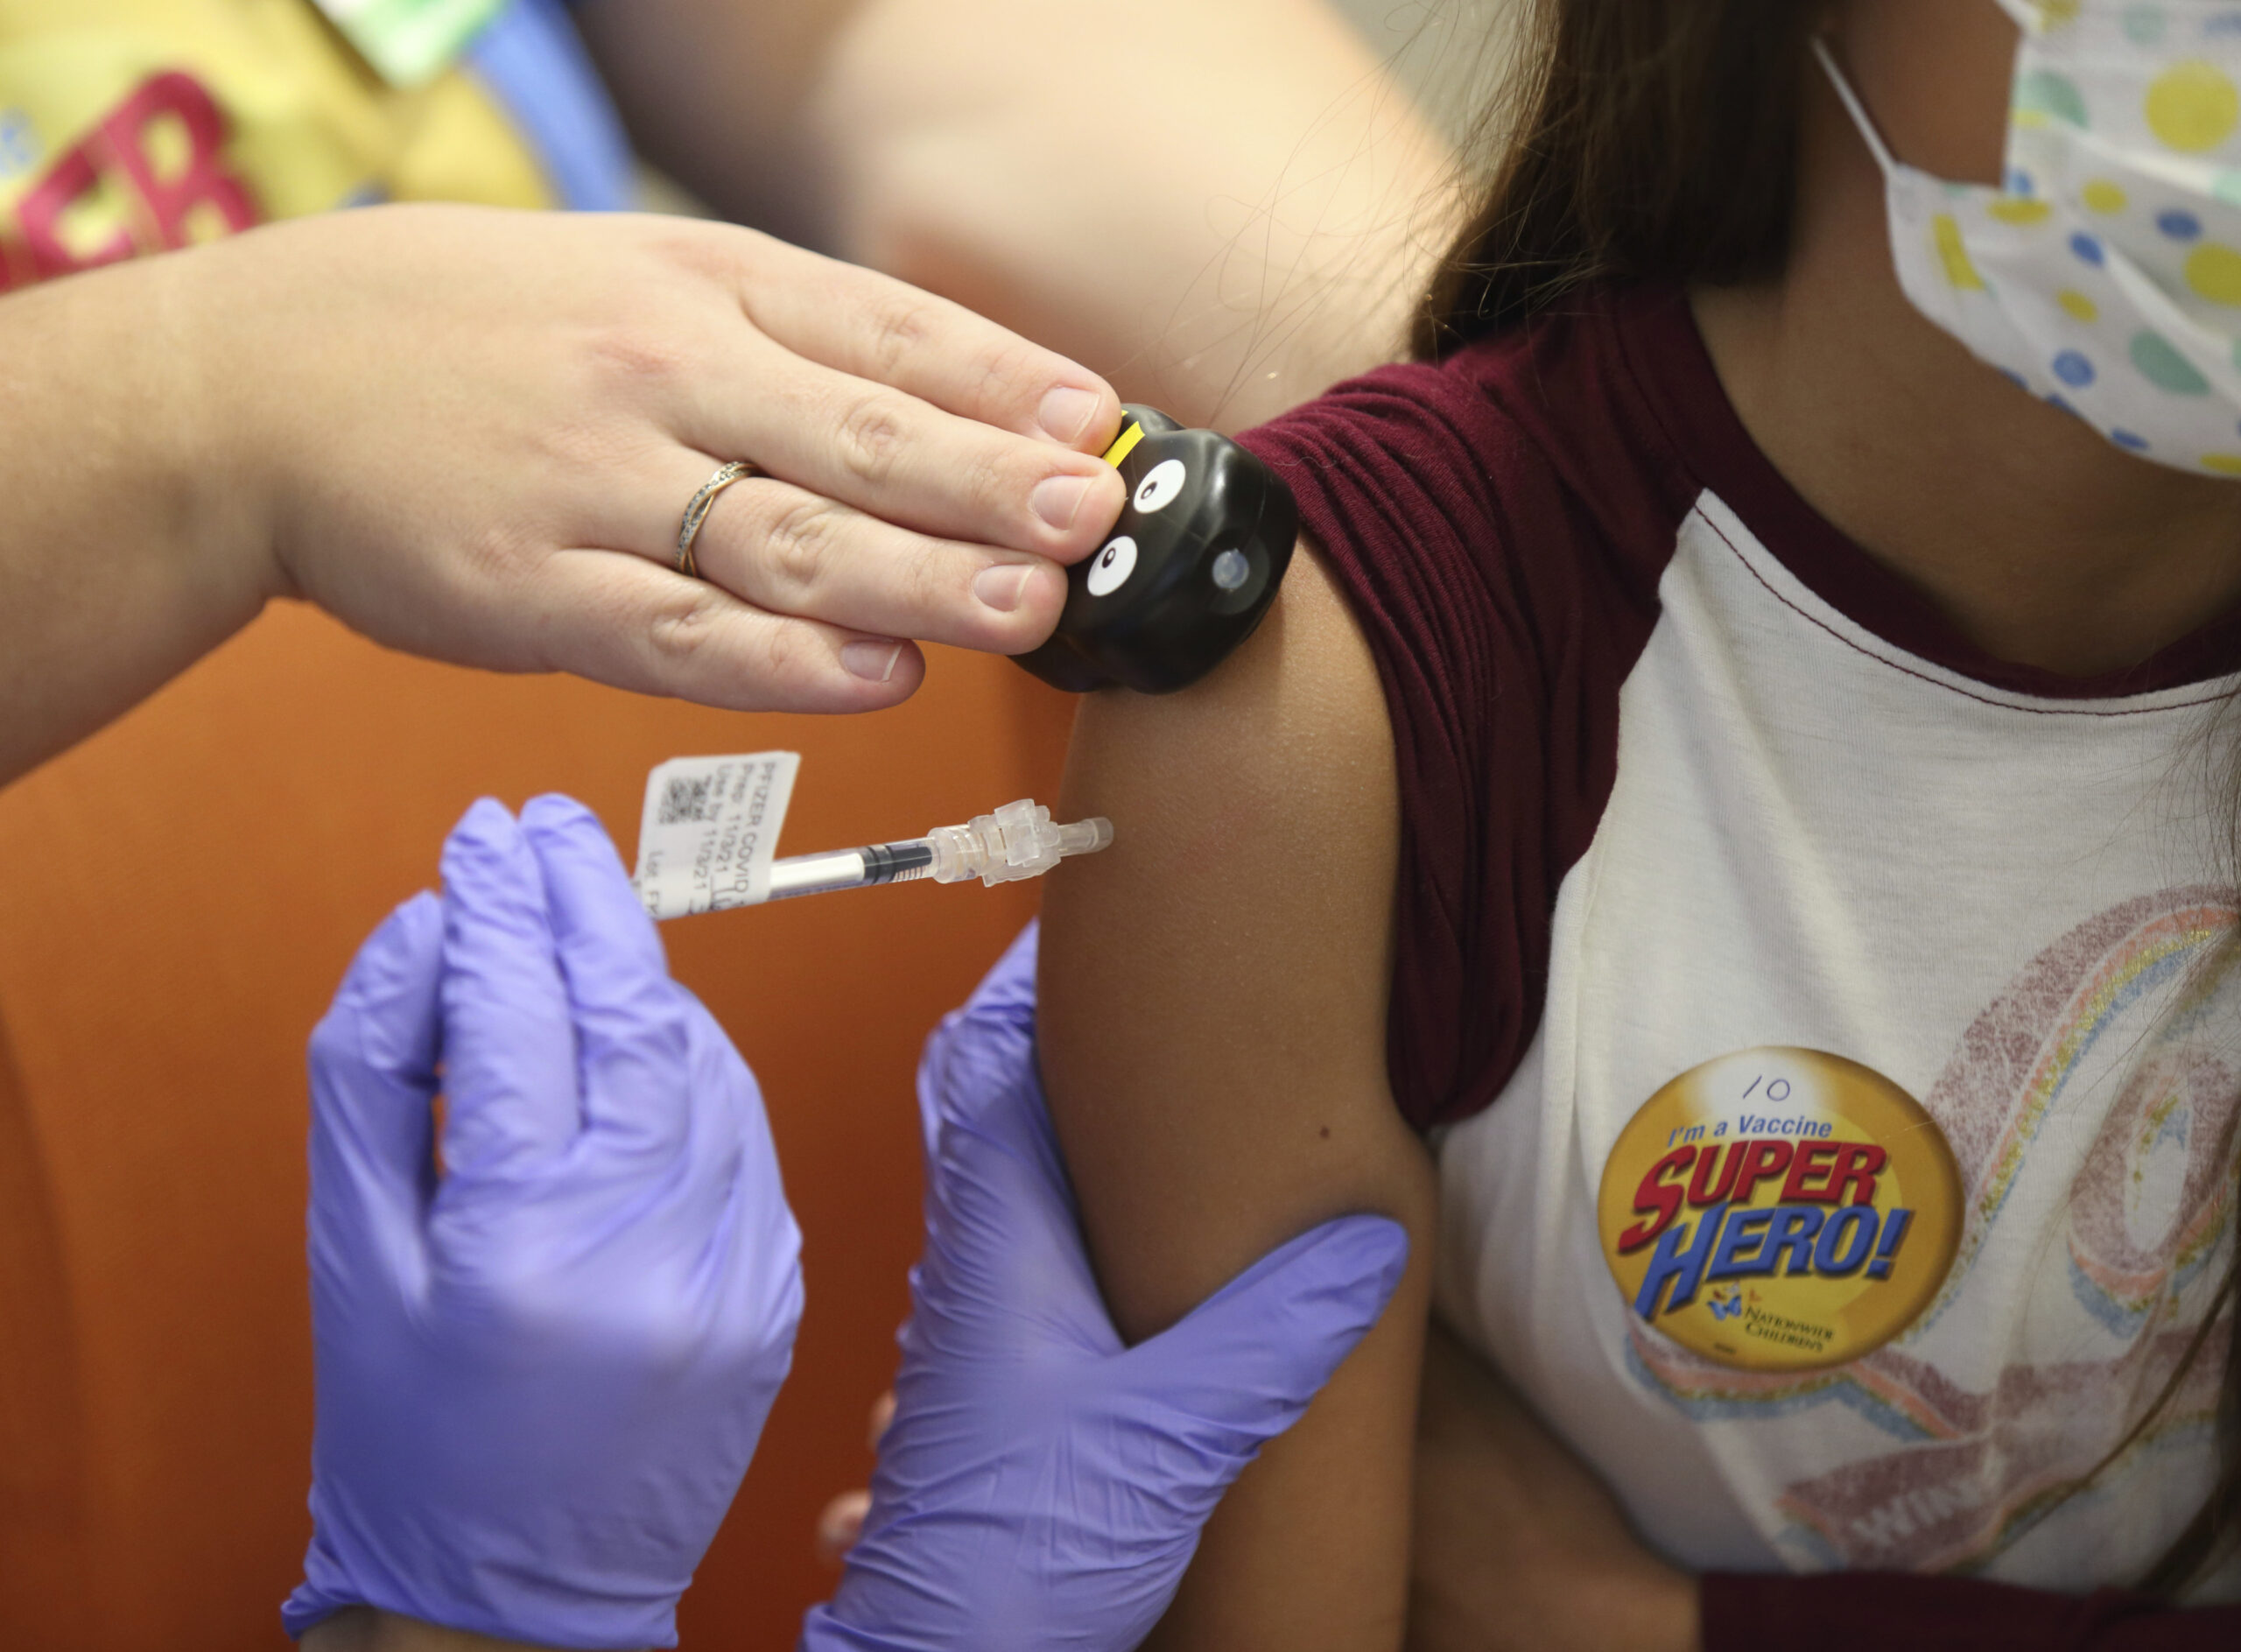 Parker McKenzie, 10, right, receives a Pfizer COVID-19 vaccine